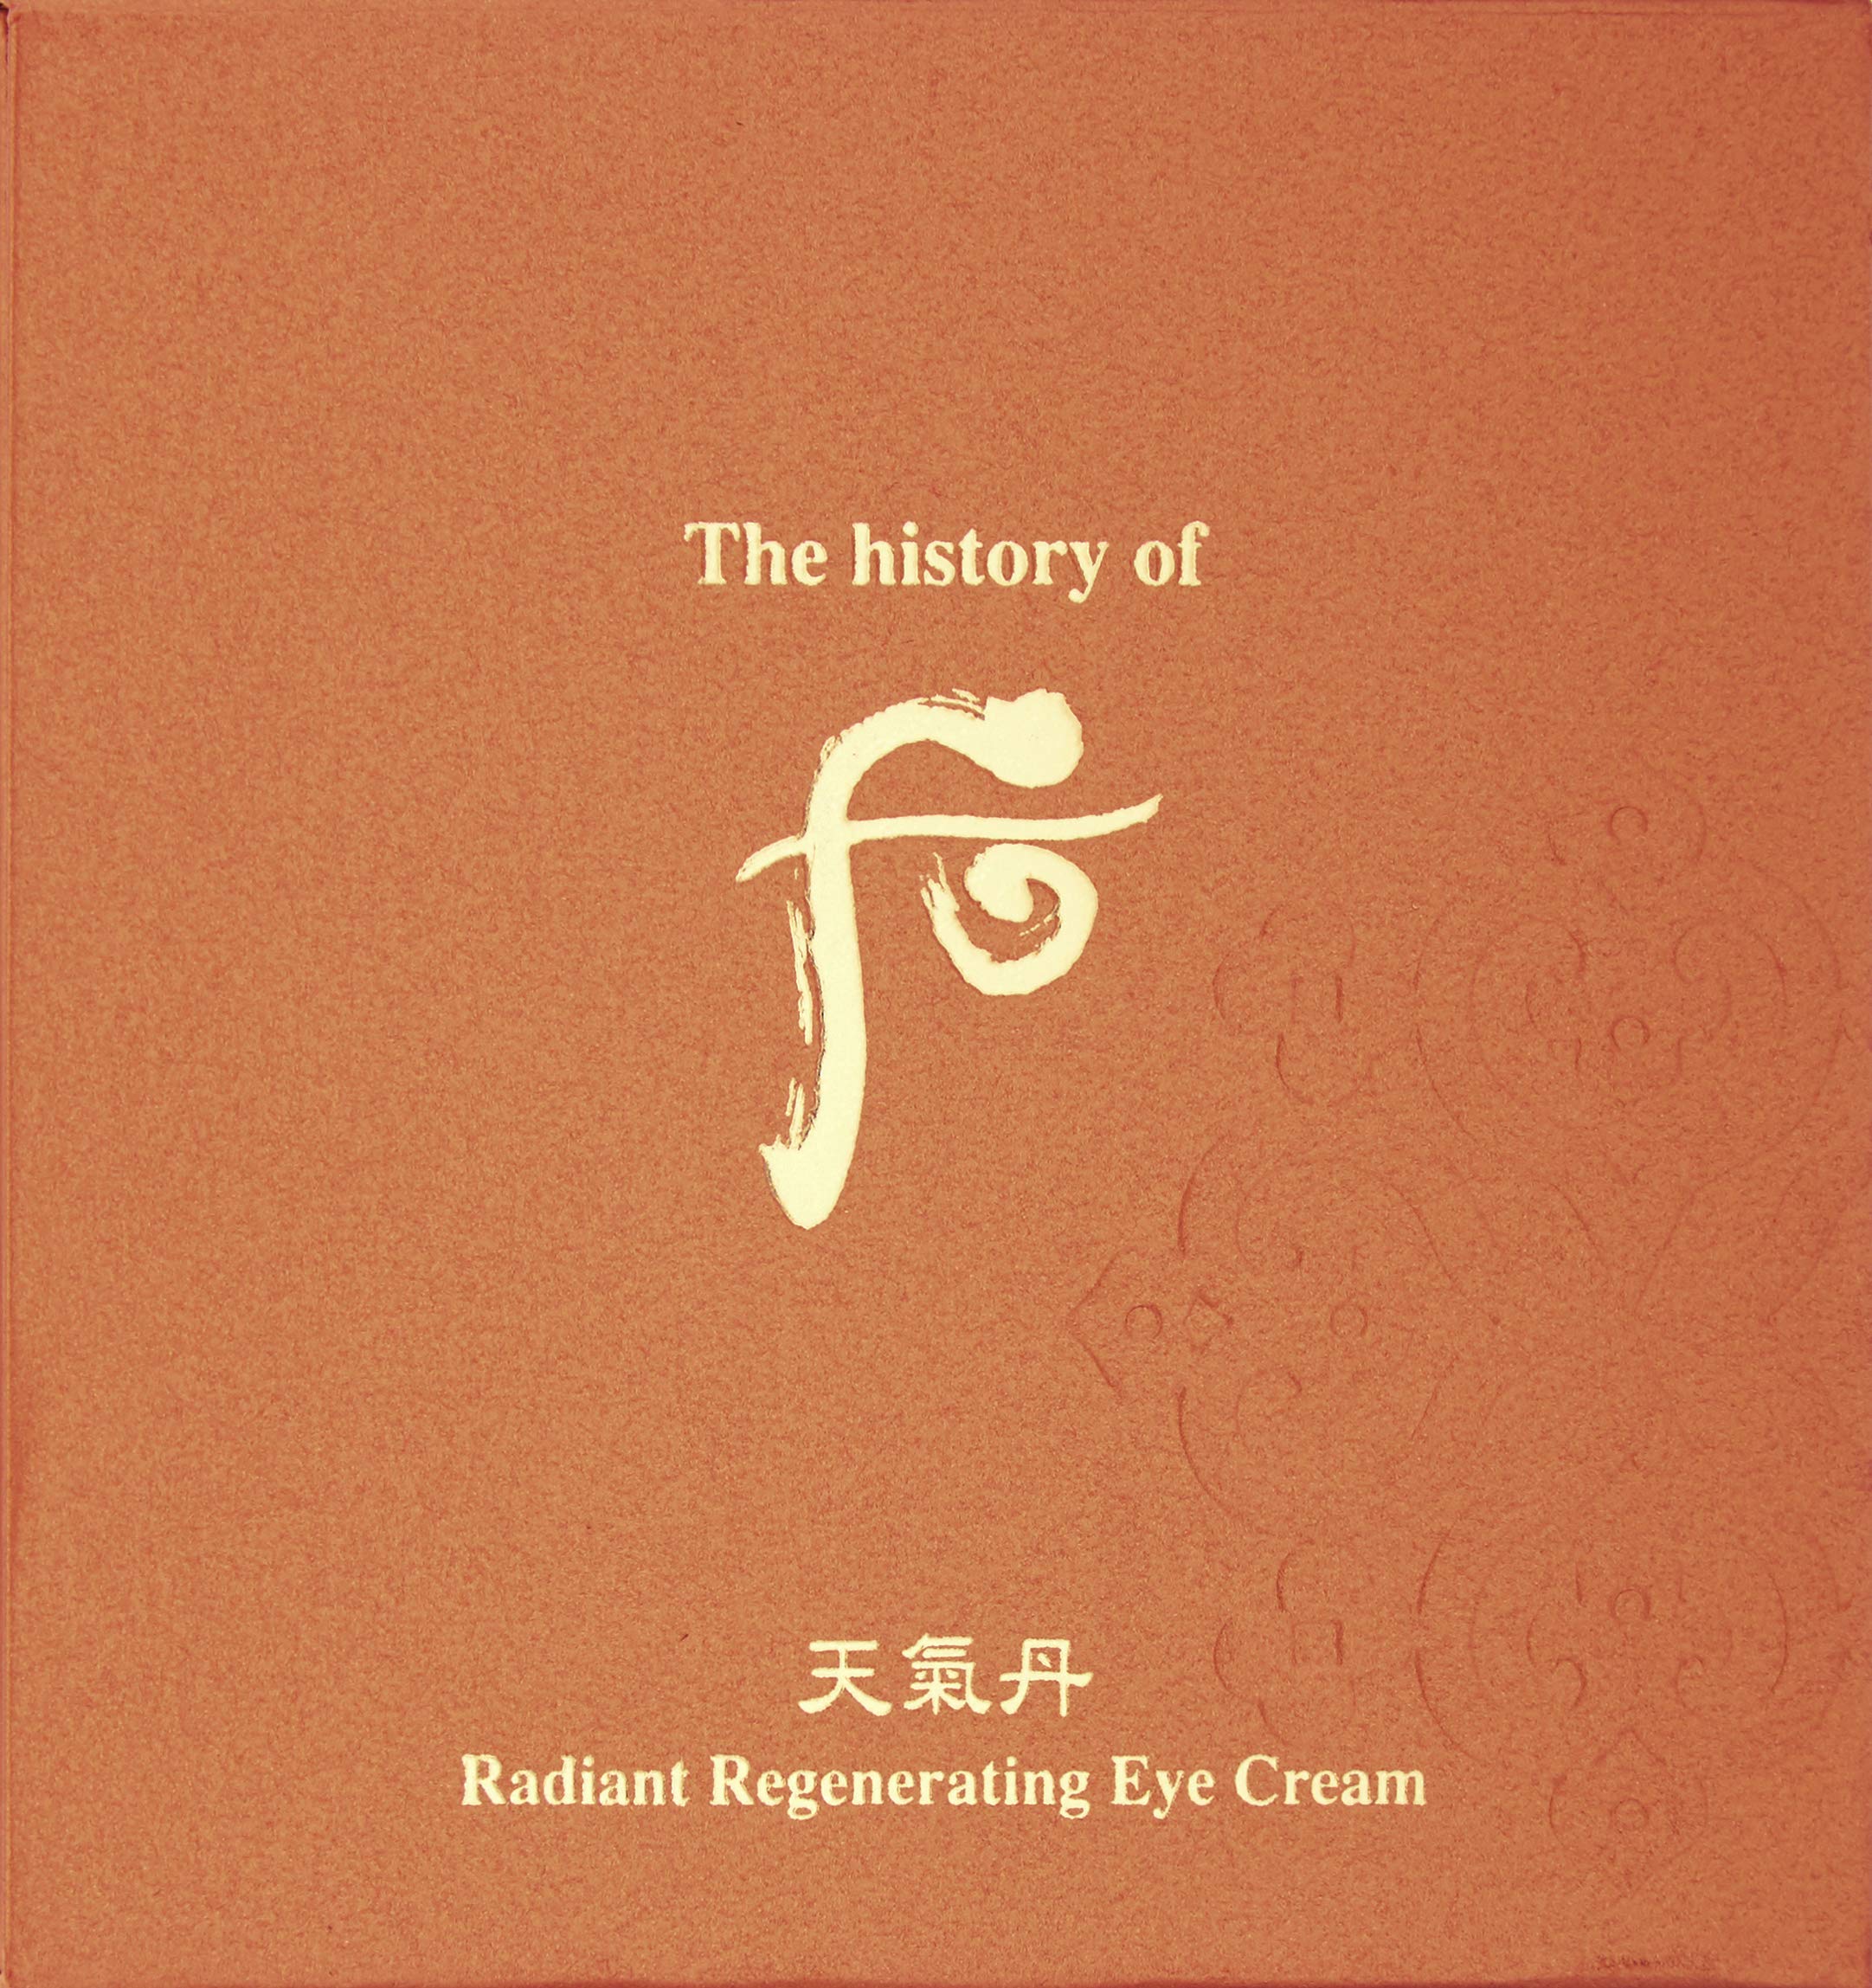 The History of Whoo Cheongidan Hwahyun Eye Cream | Radiant Regenerative Eye Cream for Excellent Firming & Rejuvenating Effects, 25ml